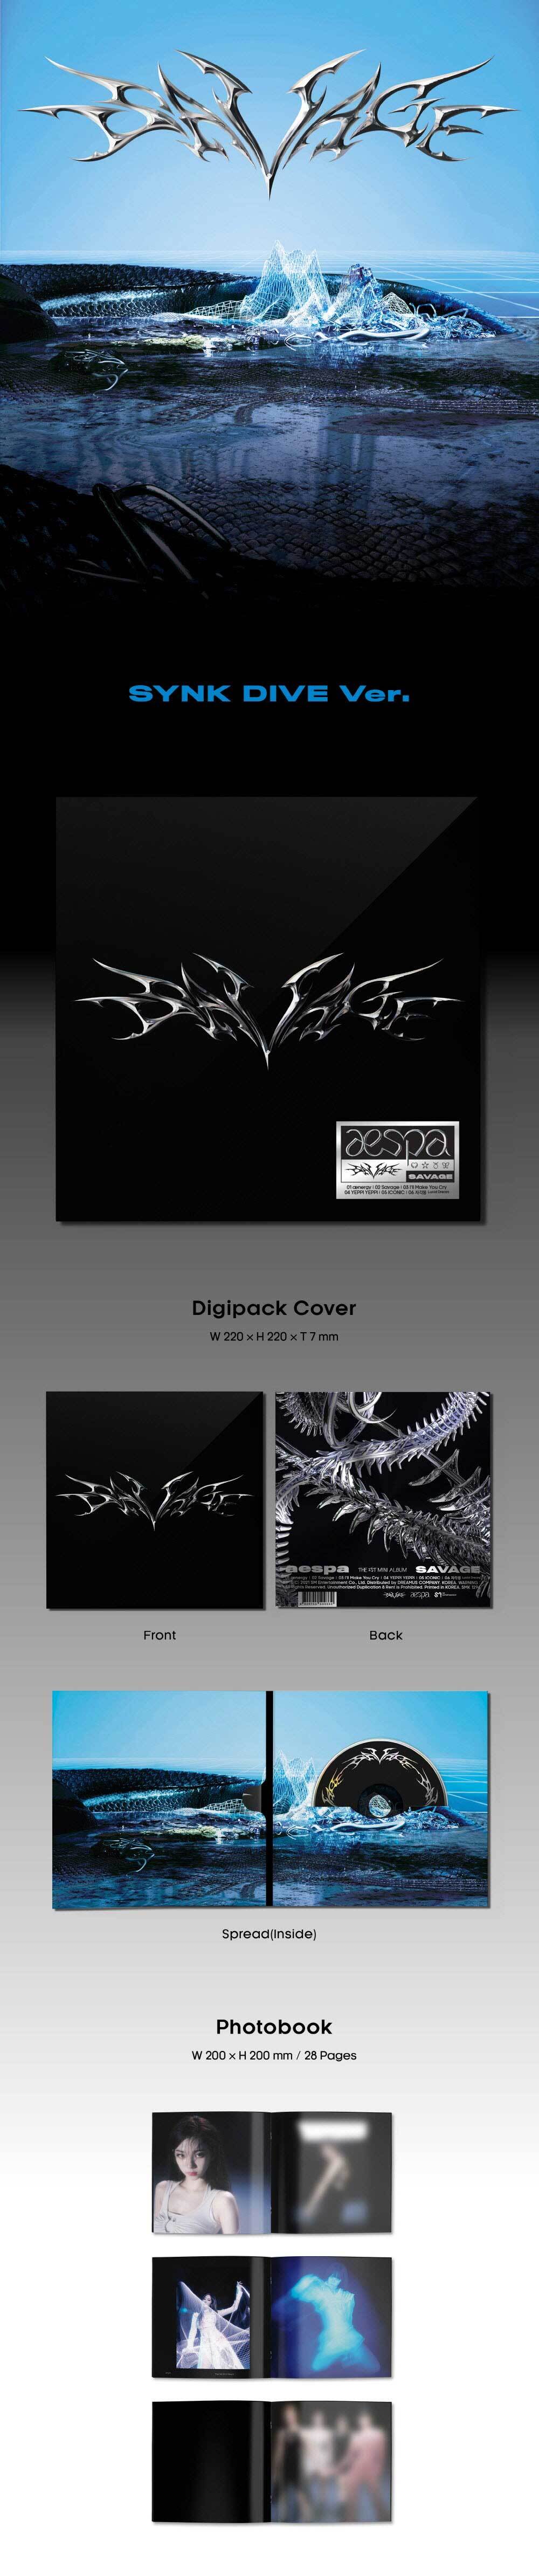 aespa - 1ST MINI ALBUM [Savage] (SYNK DIVE Ver.) aespa SAVAGE 1st mini album Photobook Digipack case